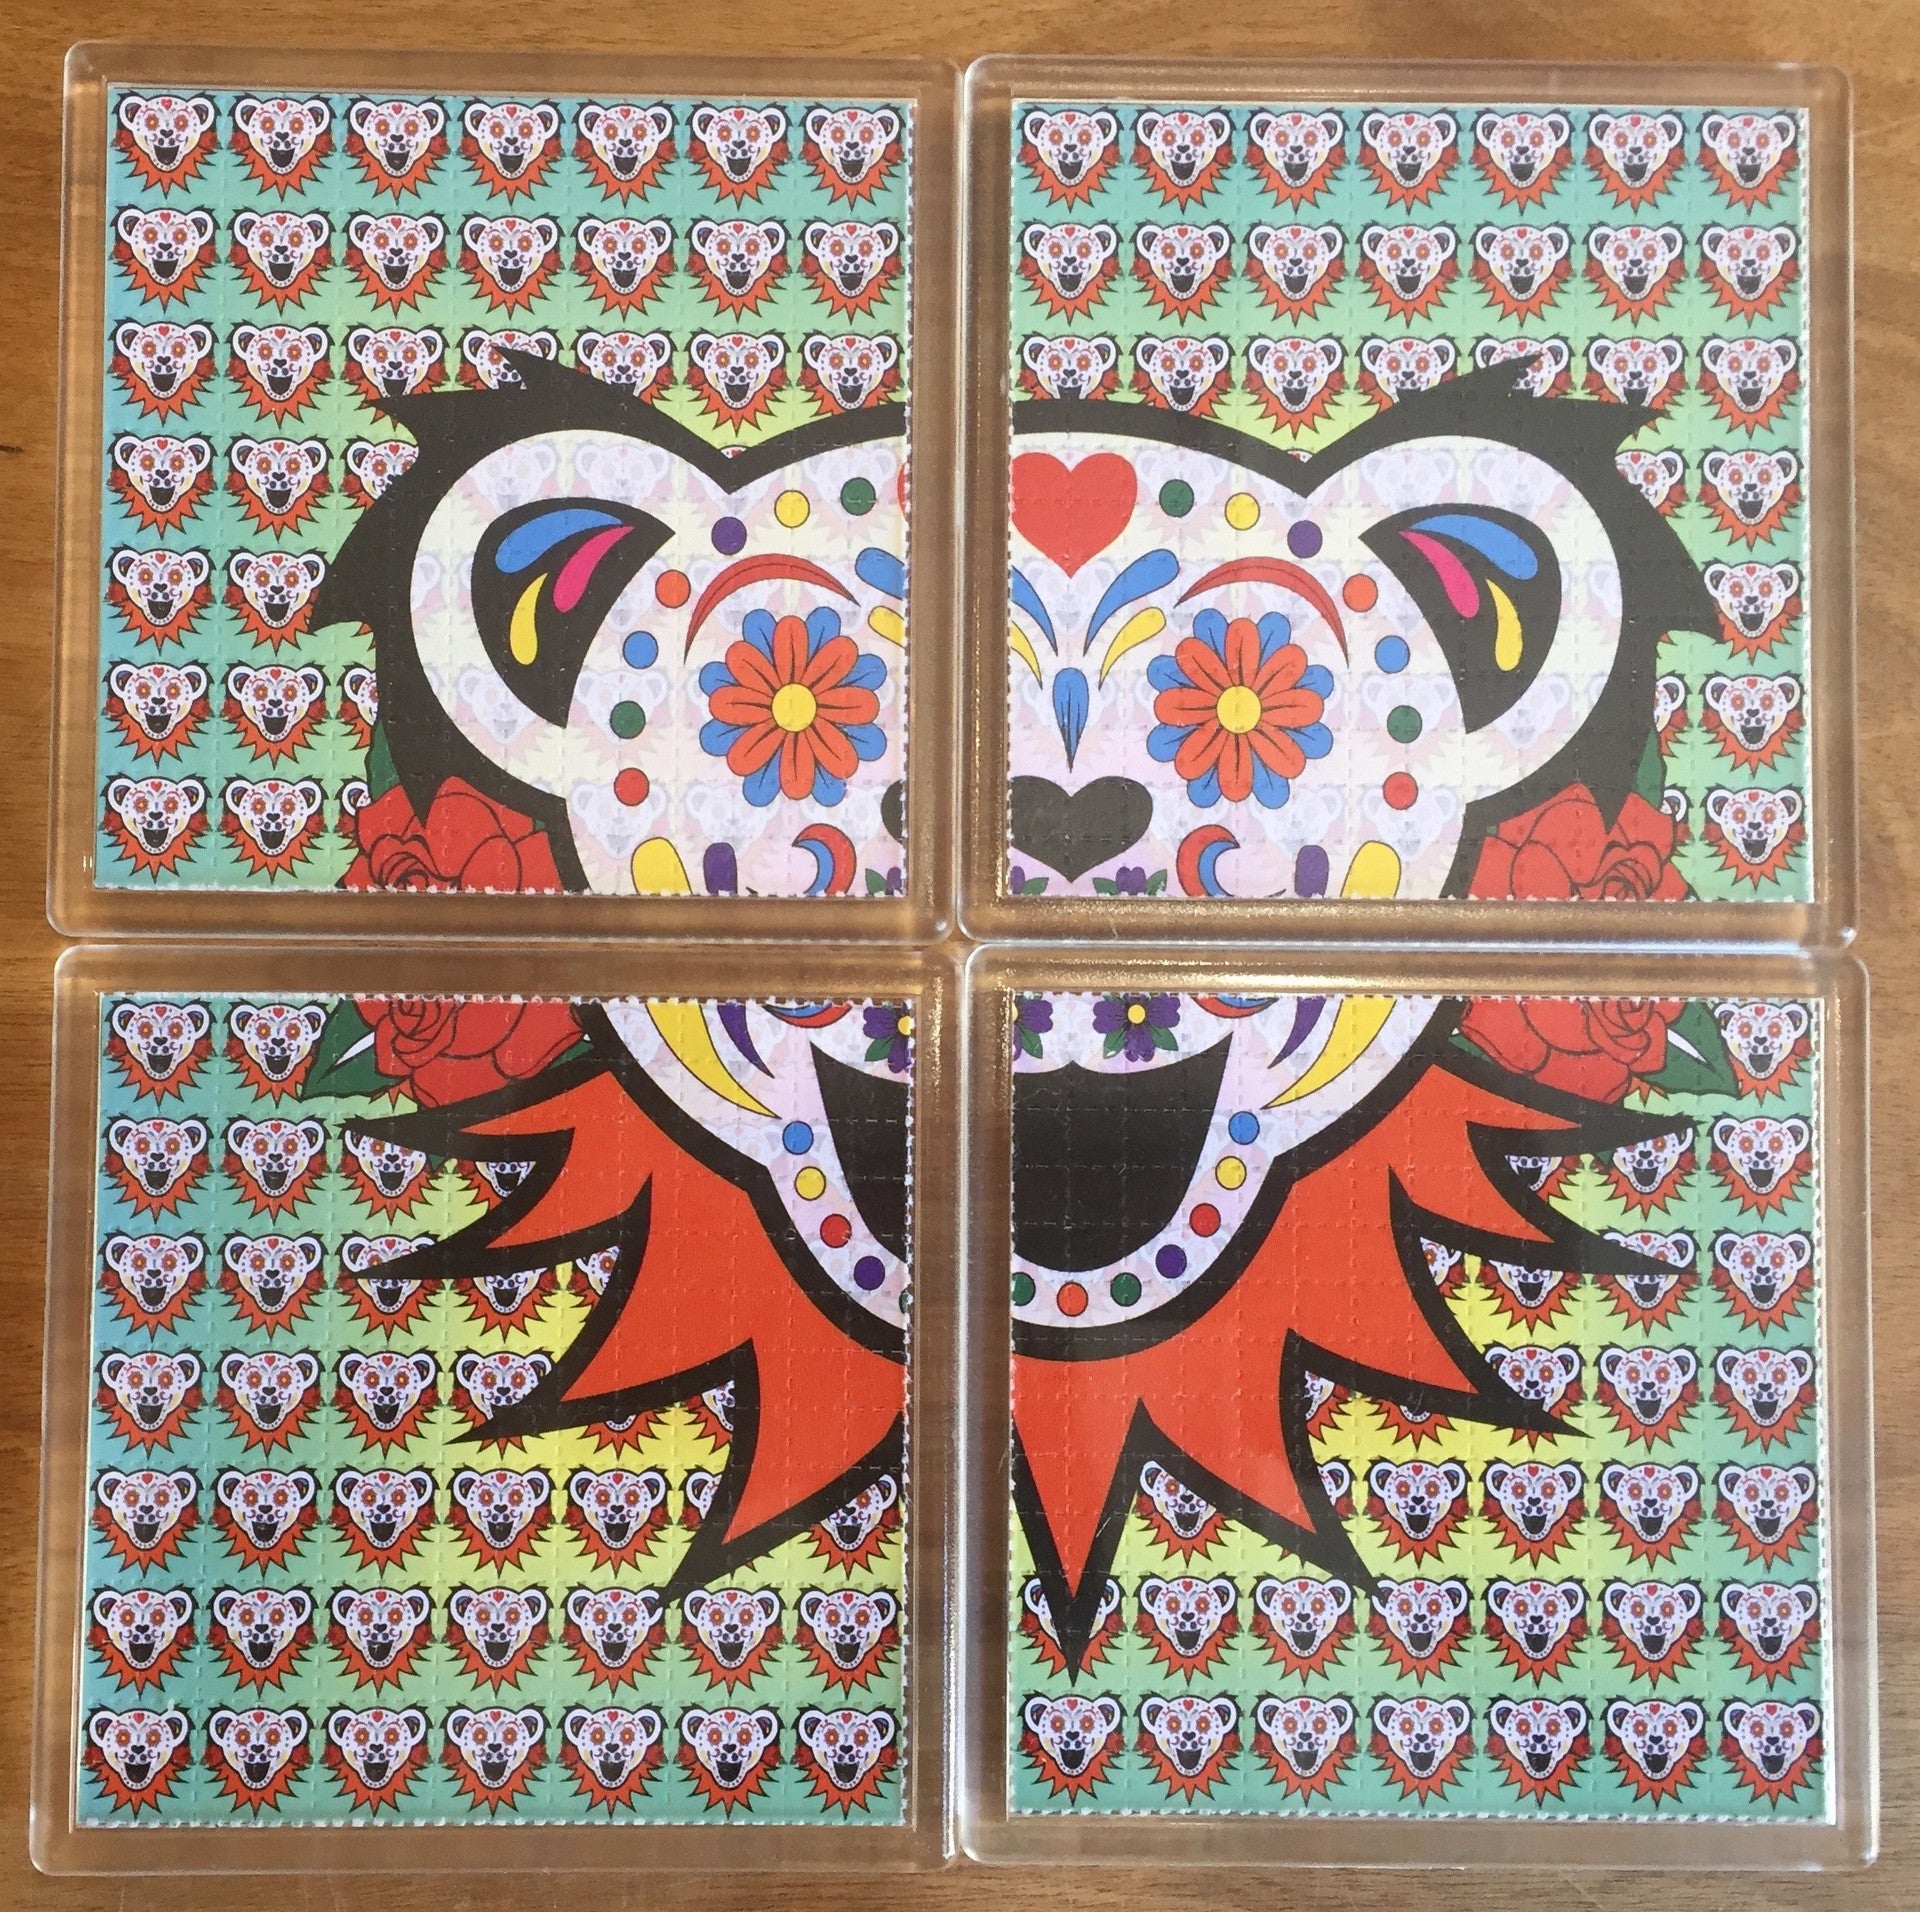 Grateful Dead / Bear - Psychedelic - Blotter Art - Highly Collectible Artwork Blotter Paper Coaster (4 pack)